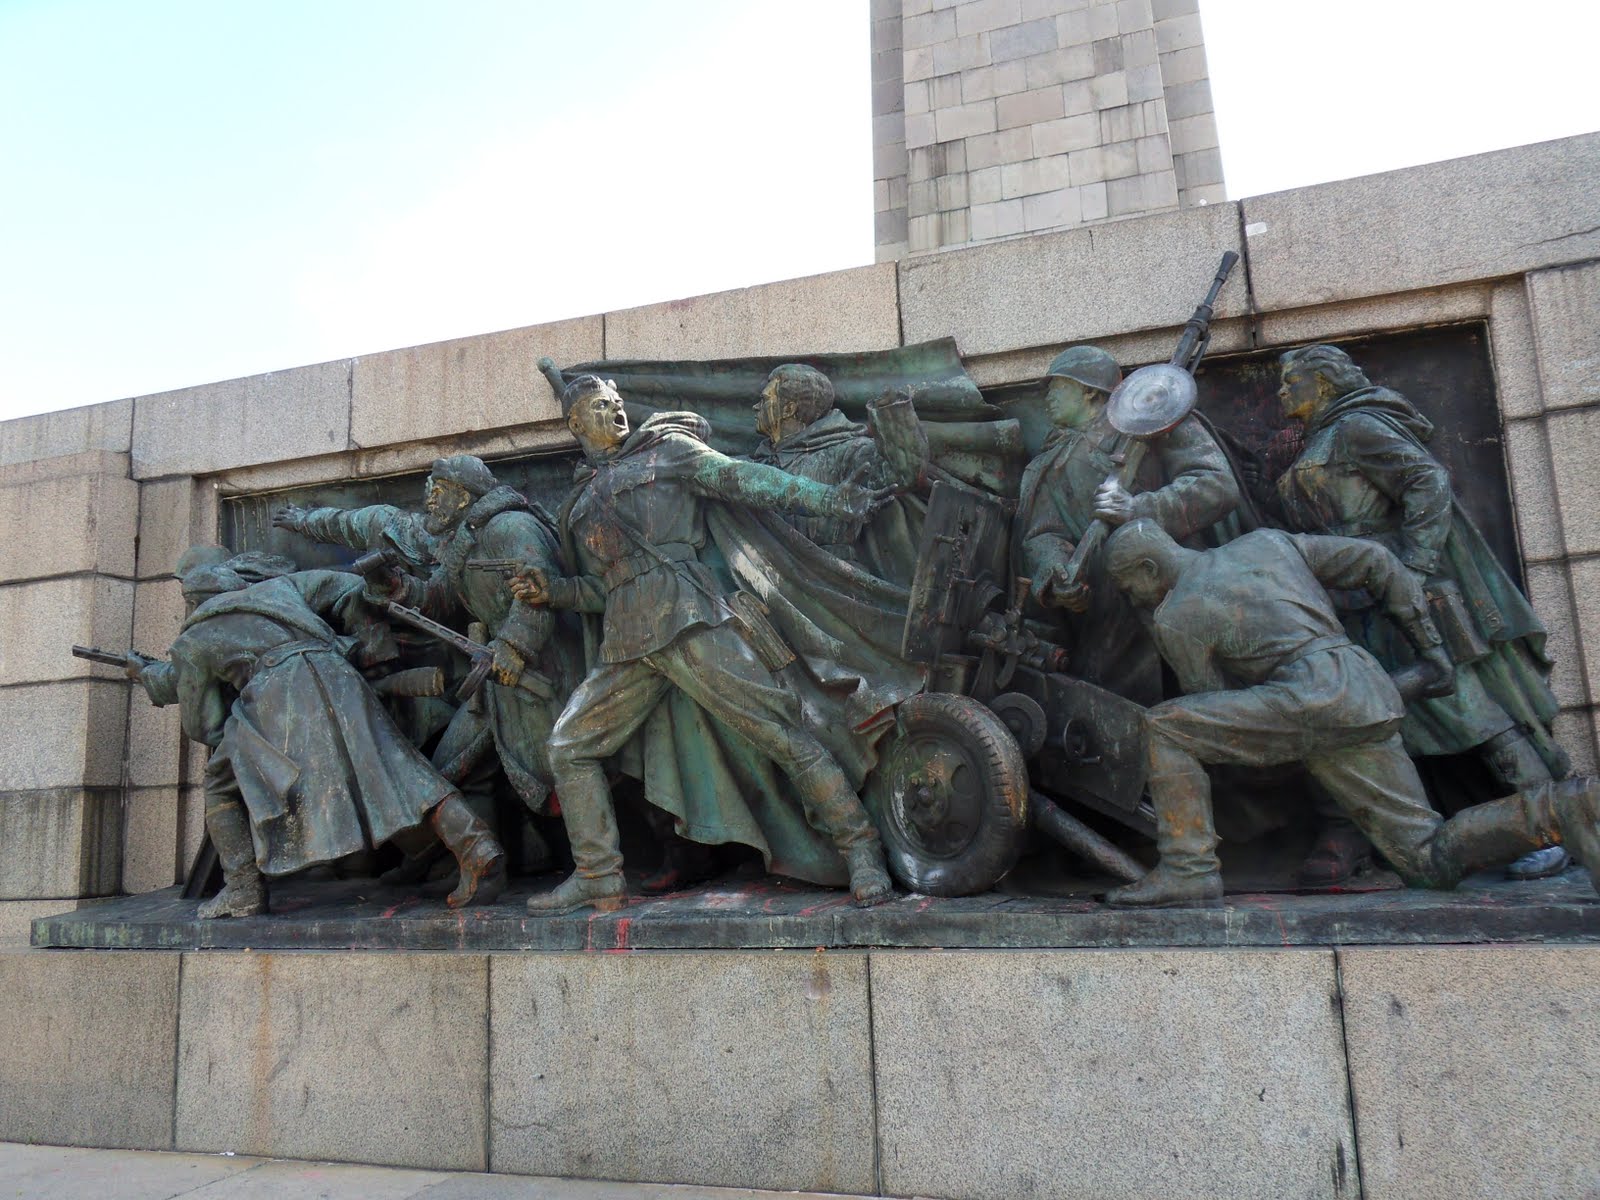 Christopher's Expat Adventure: Sofia's Soviet Army Memorial